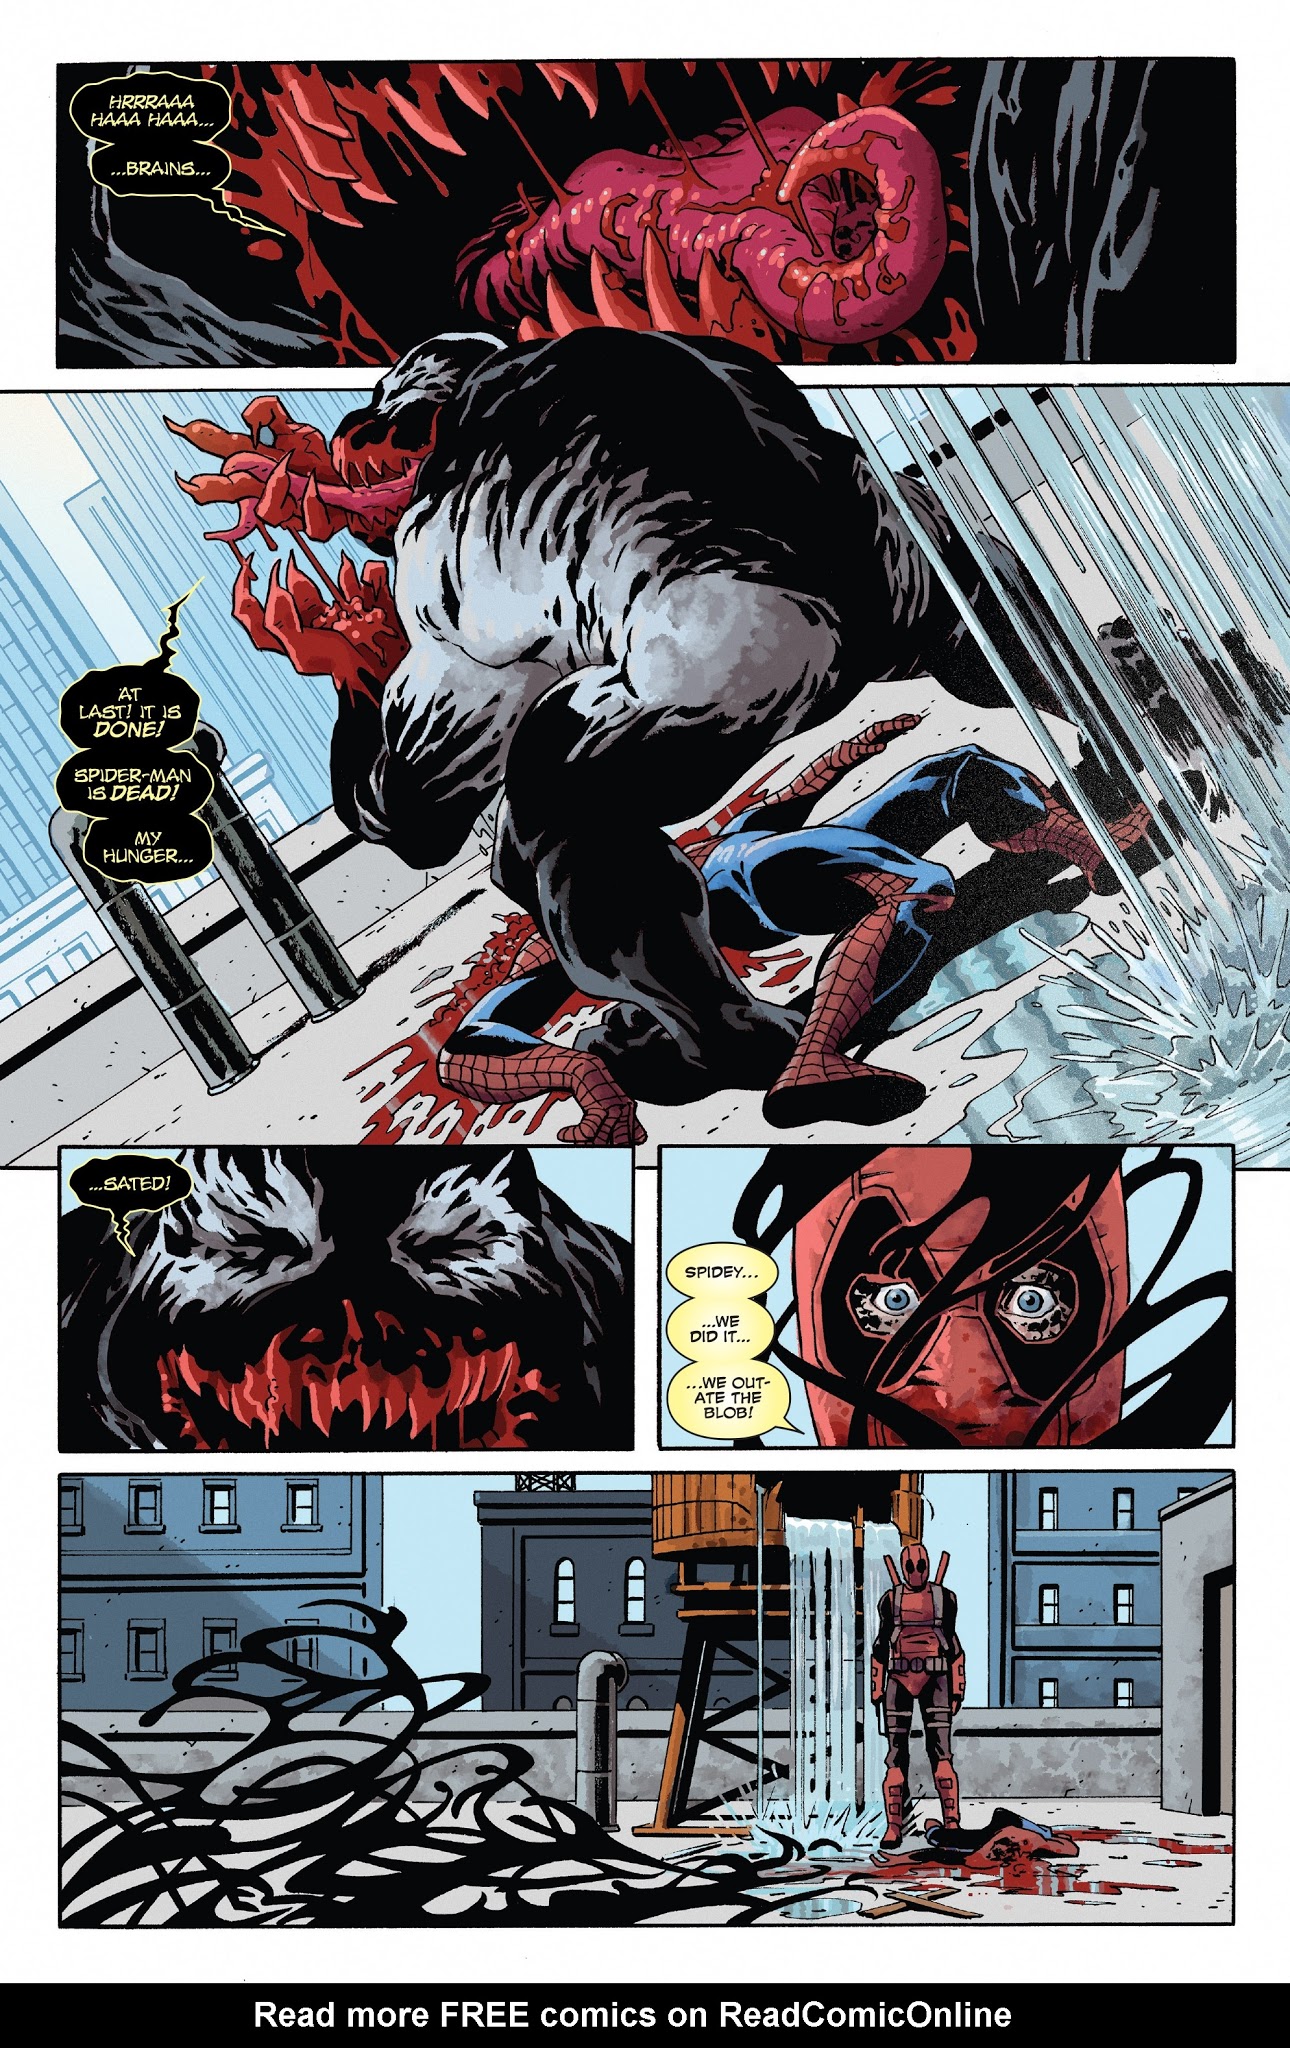 Deadpool Kills The Marvel Universe Again Issue 2 Viewcomic